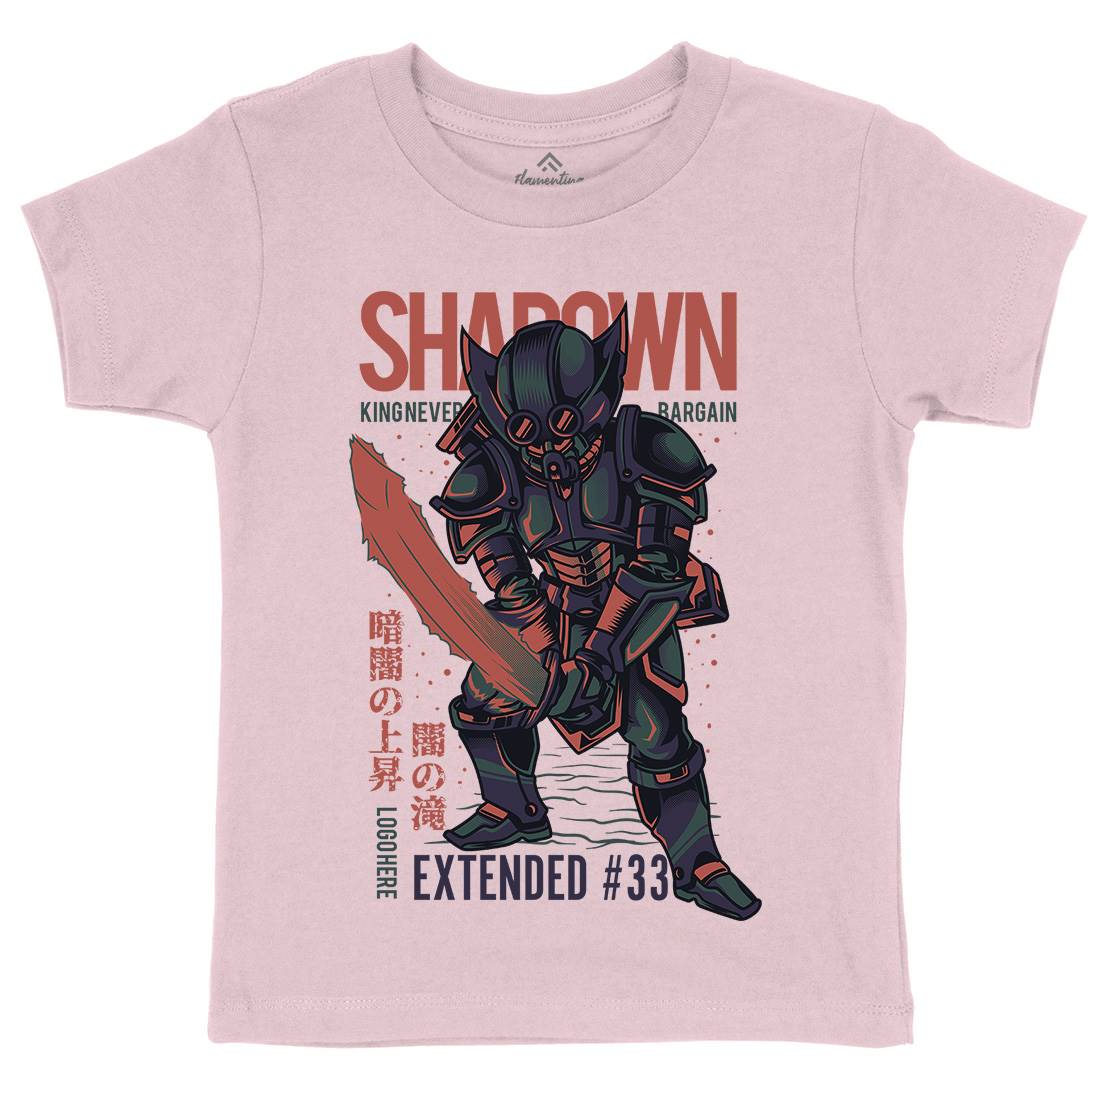 Shadown Knight Kids Organic Crew Neck T-Shirt Warriors D812